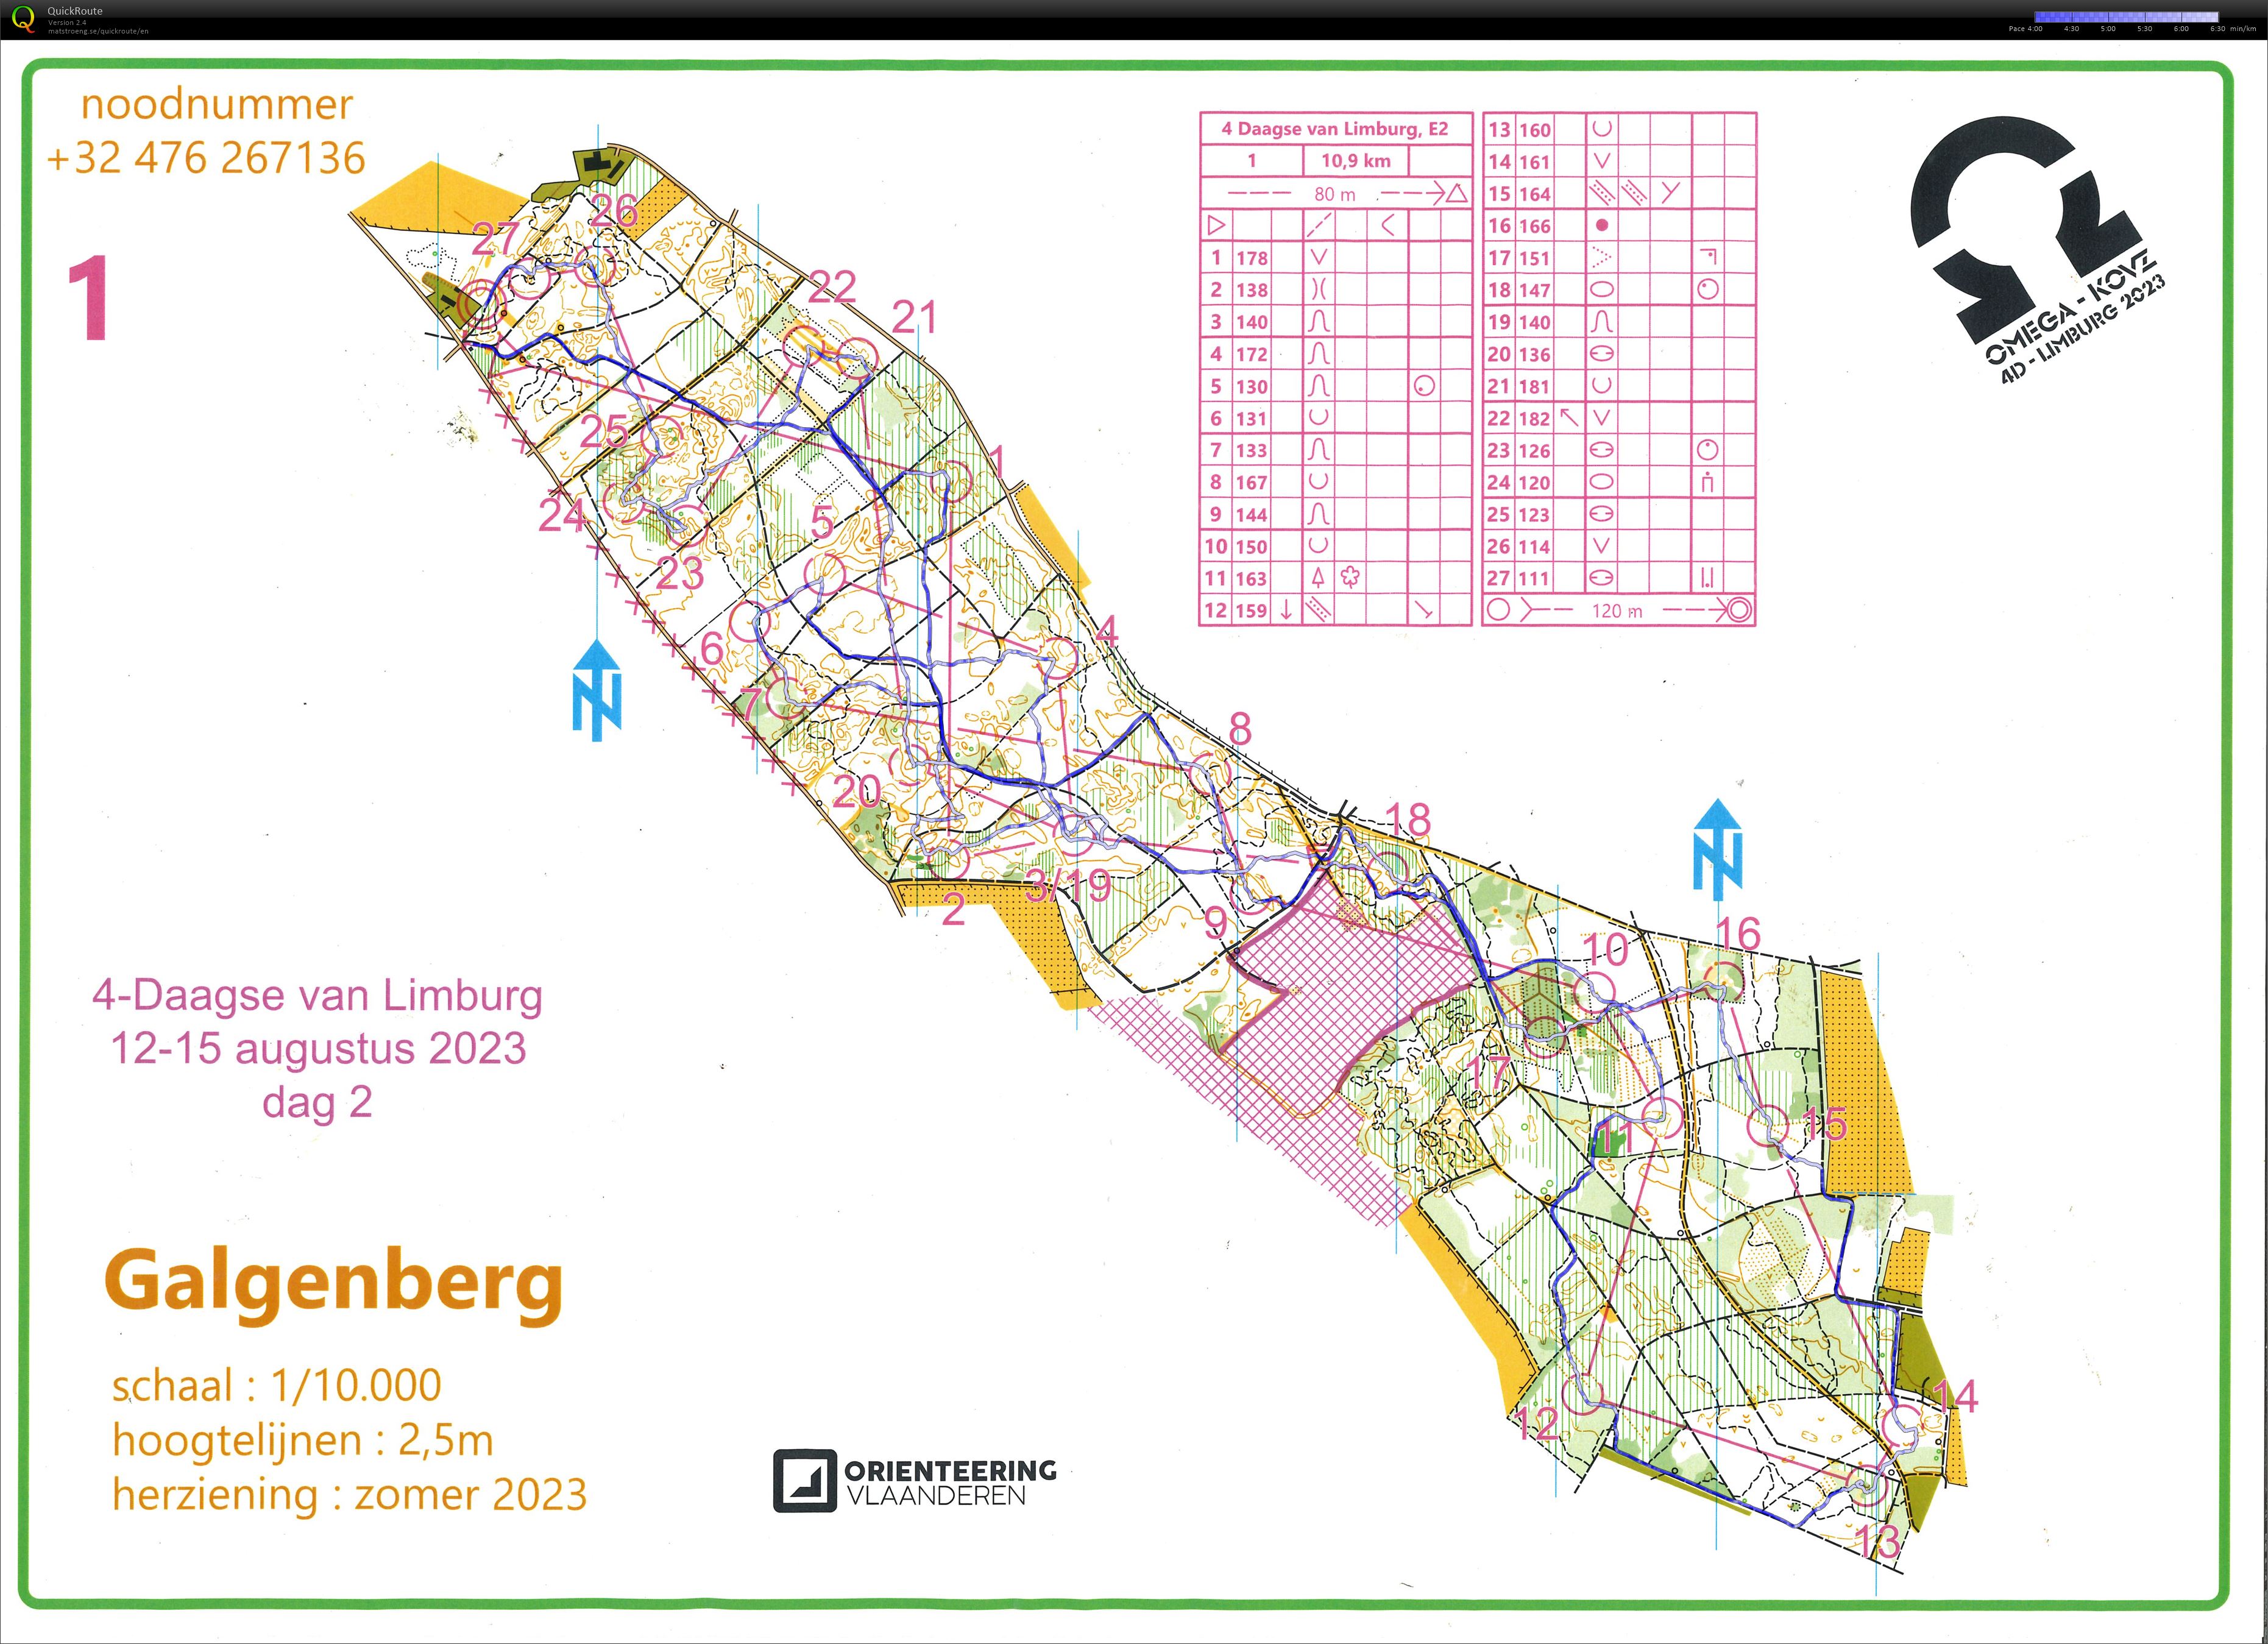 4-daagse van Limburg - dag 2 (13/08/2023)